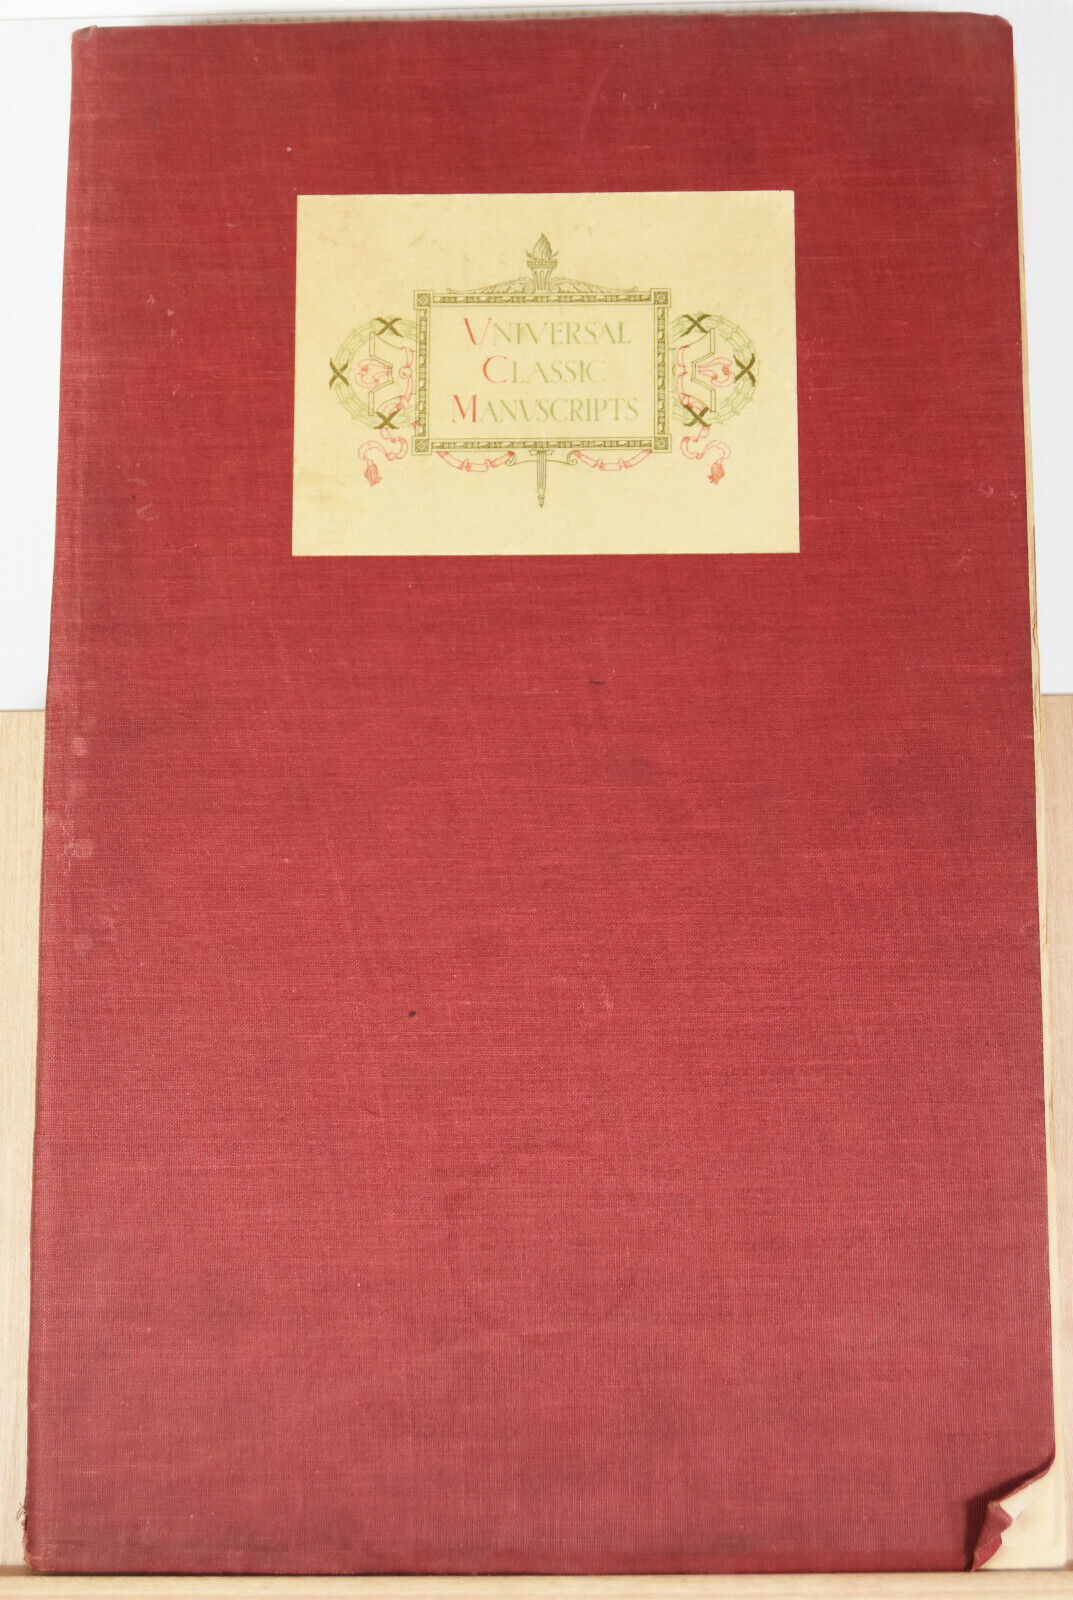 1900s Antique Book Universal Classic Manuscripts Dunne Michelangelo Cromwell